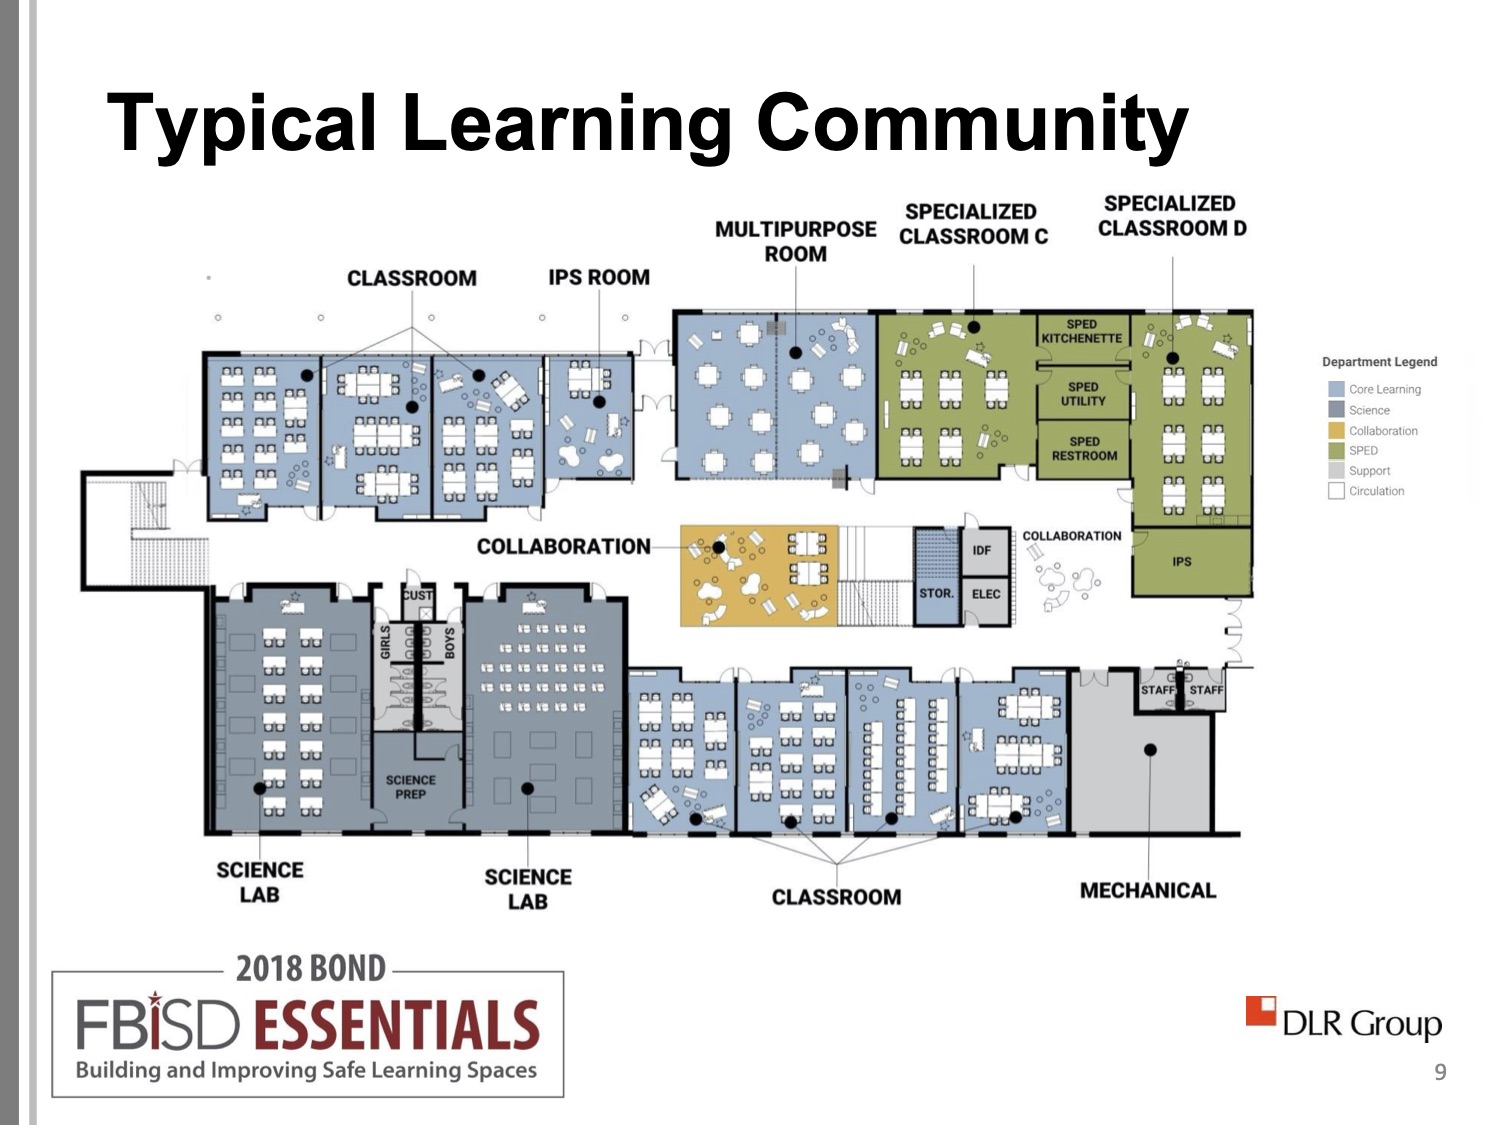 Typical Learning Community floorplan for Sienna's FBISD high school